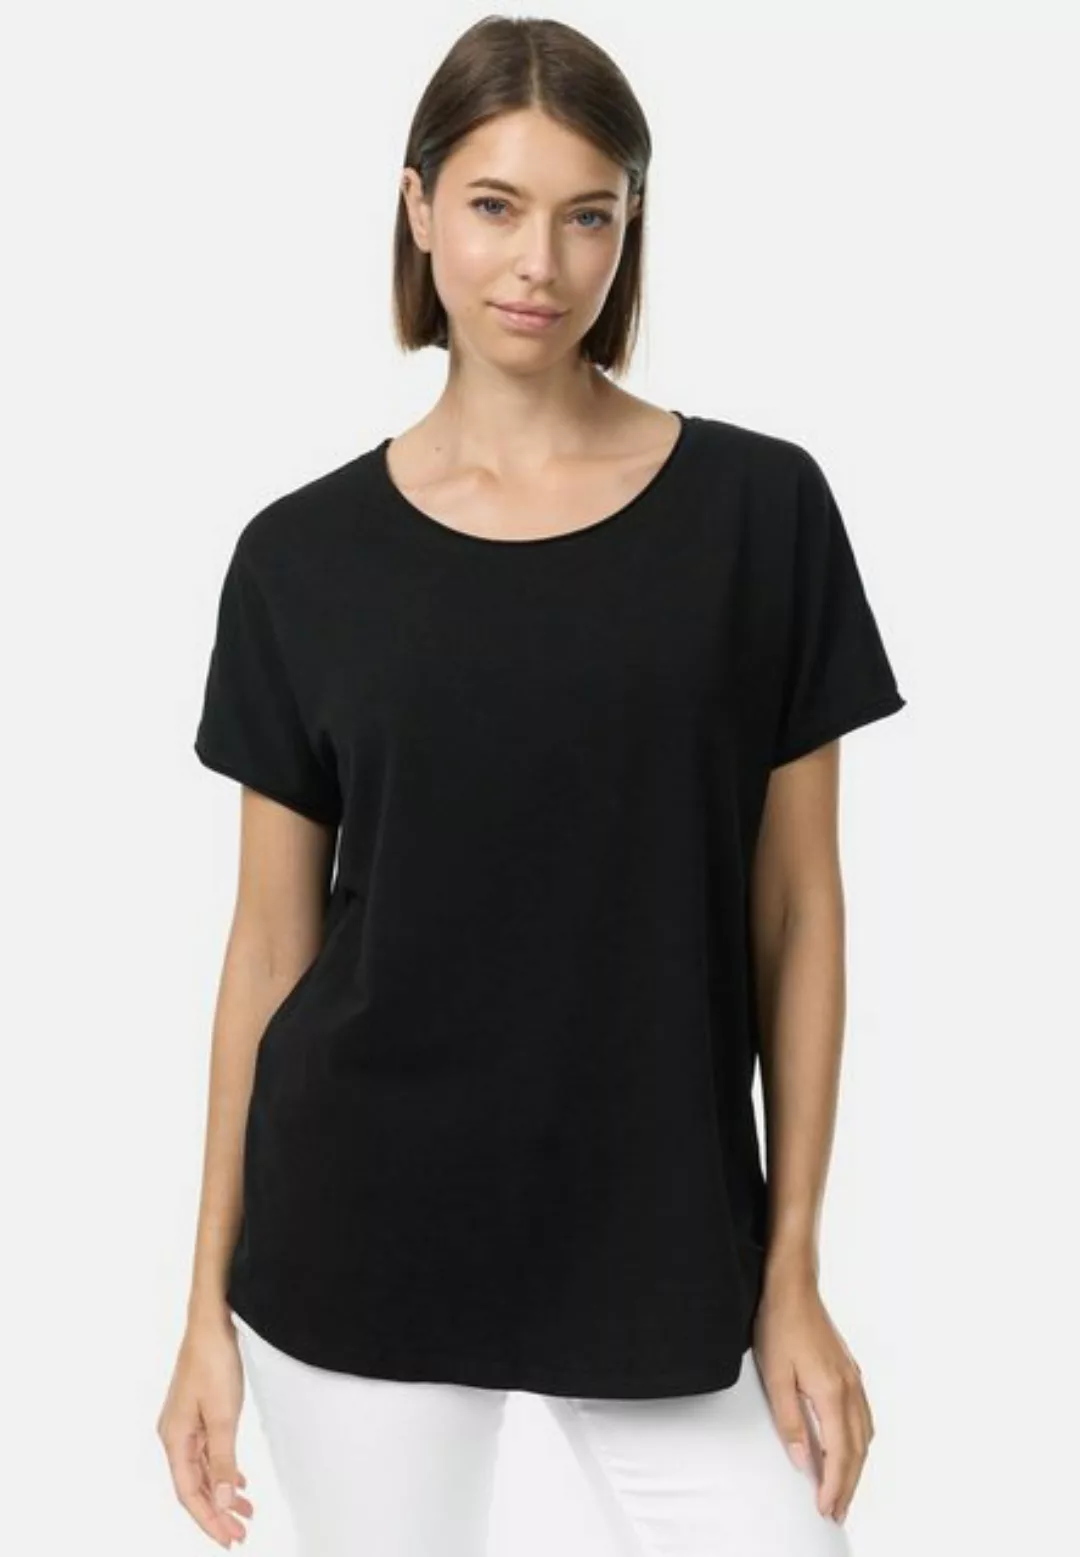 PM SELECTED T-Shirt PM60 (Legere, sportliches T-Shirt in A-Linie) Hautfreun günstig online kaufen